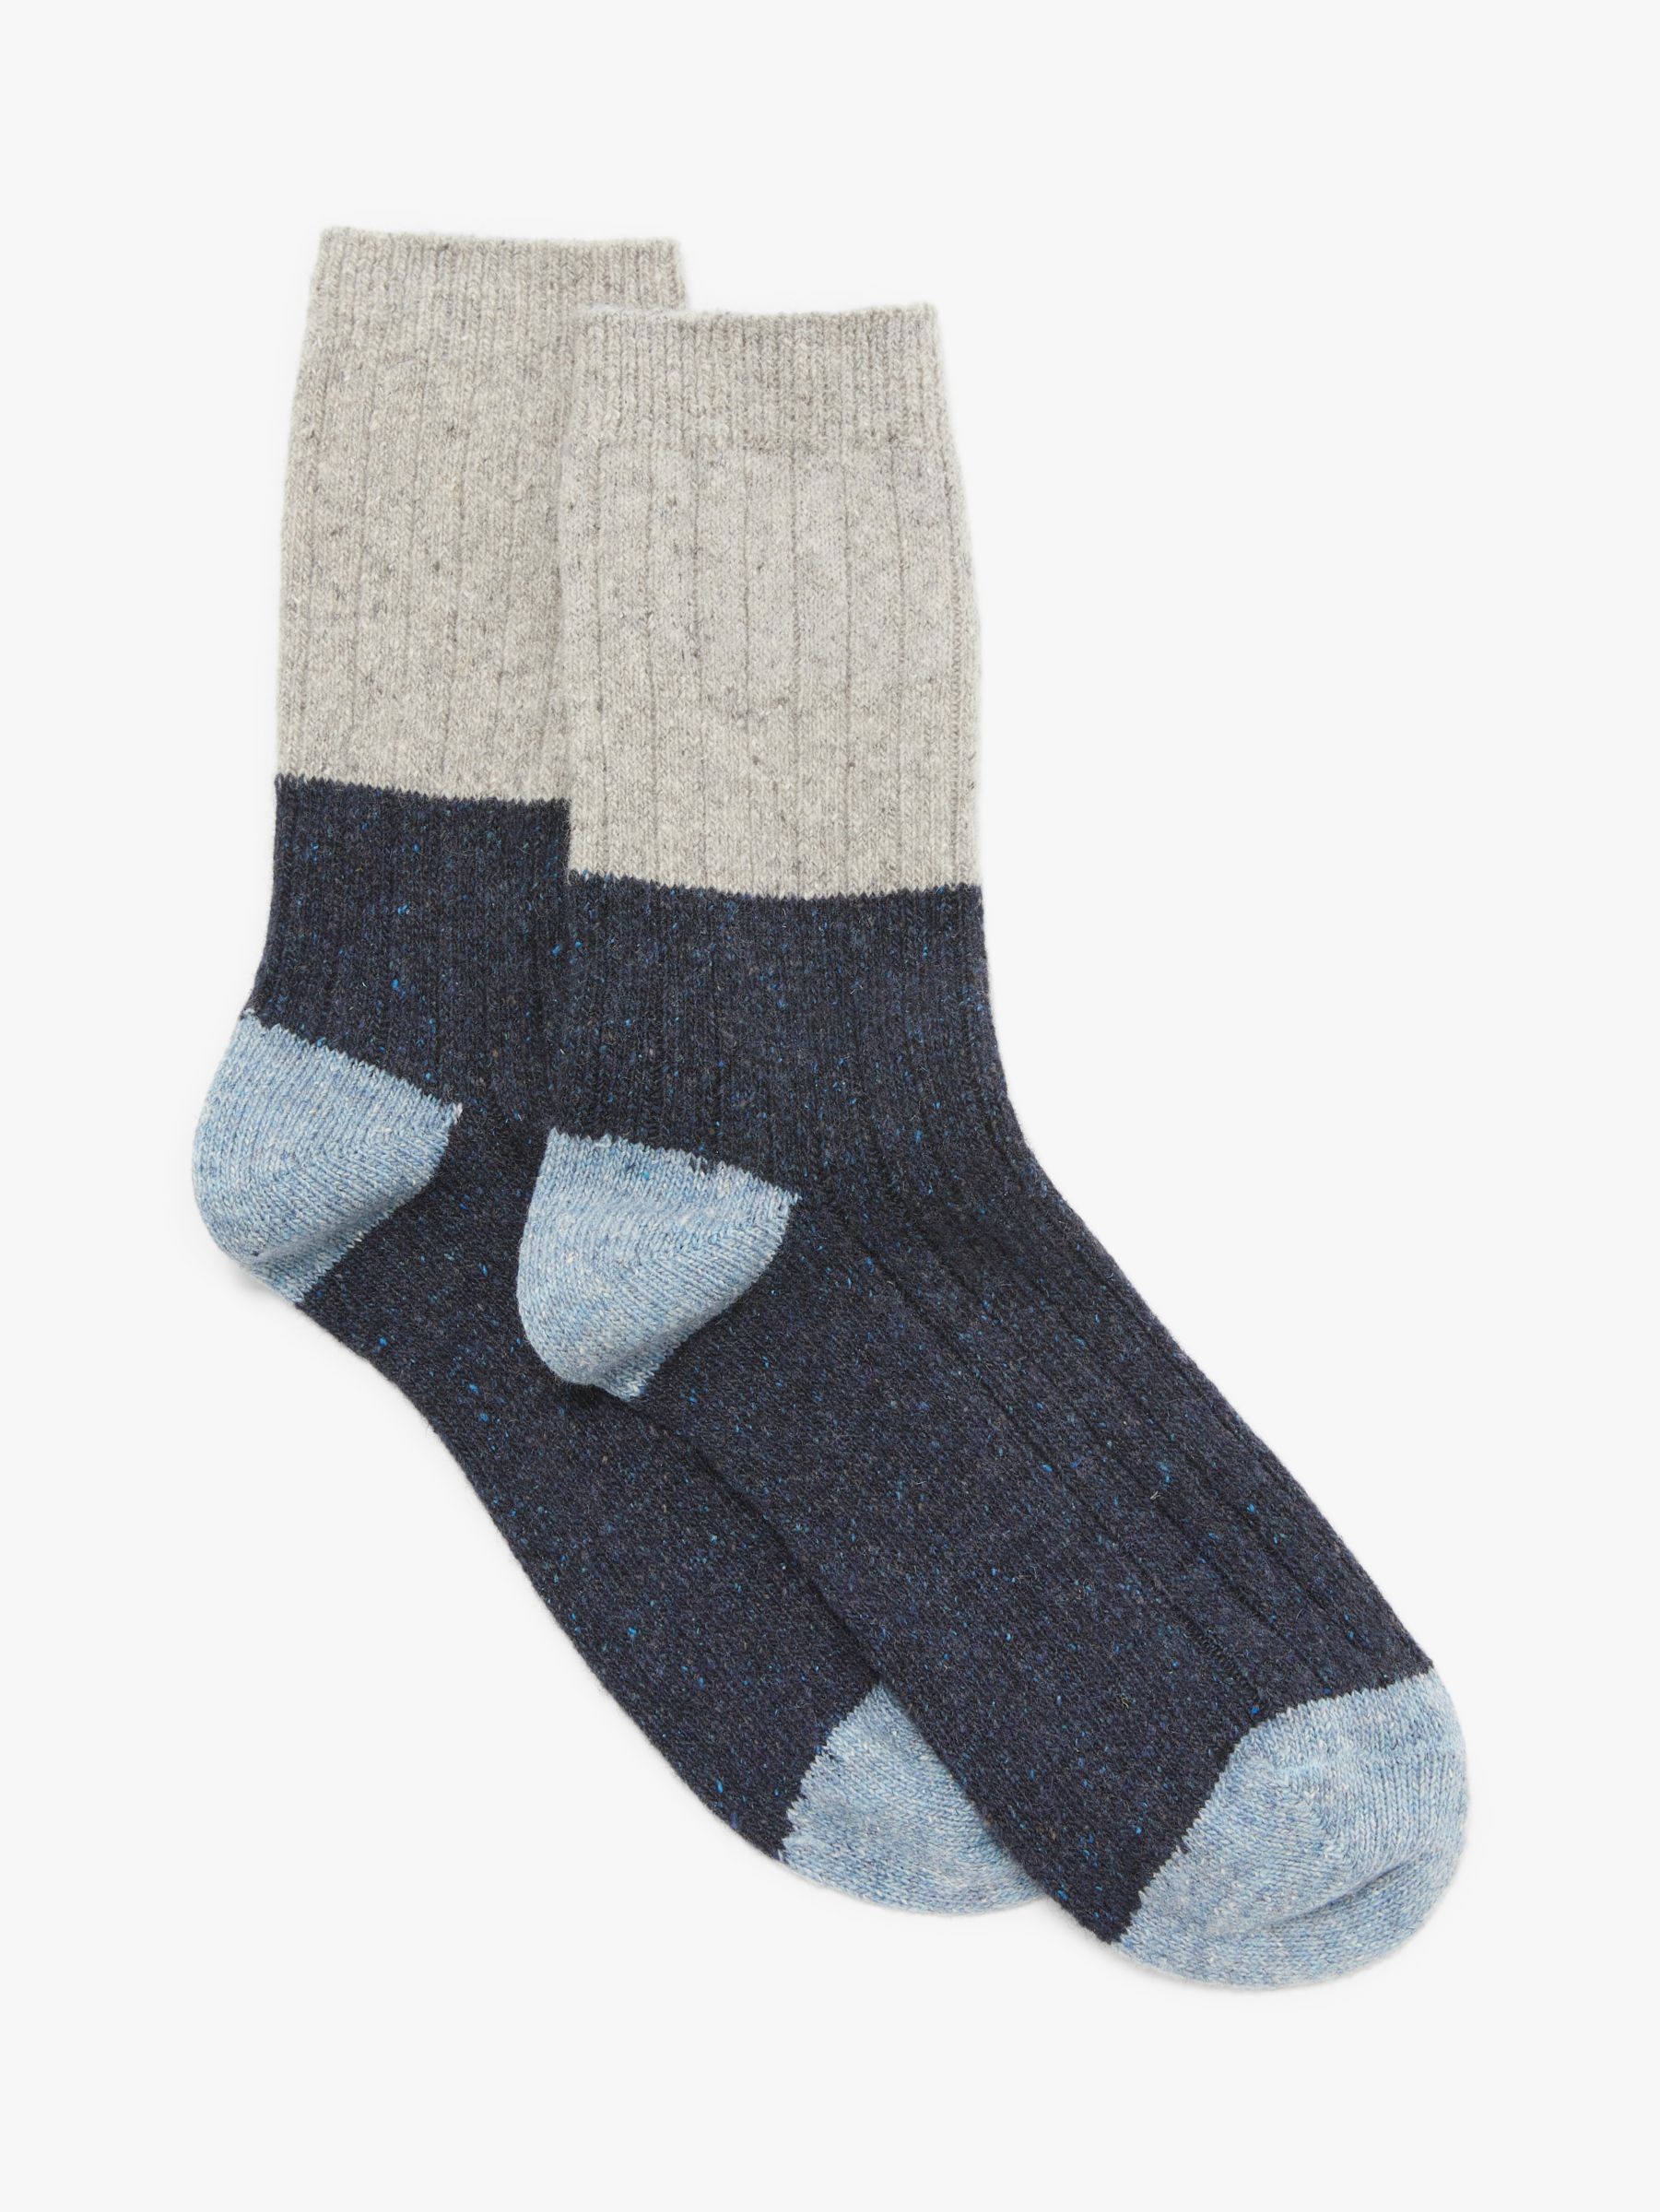 John Lewis & Partners Wool Silk Blend Ankle Socks, Navy/Grey/Pale Blue ...